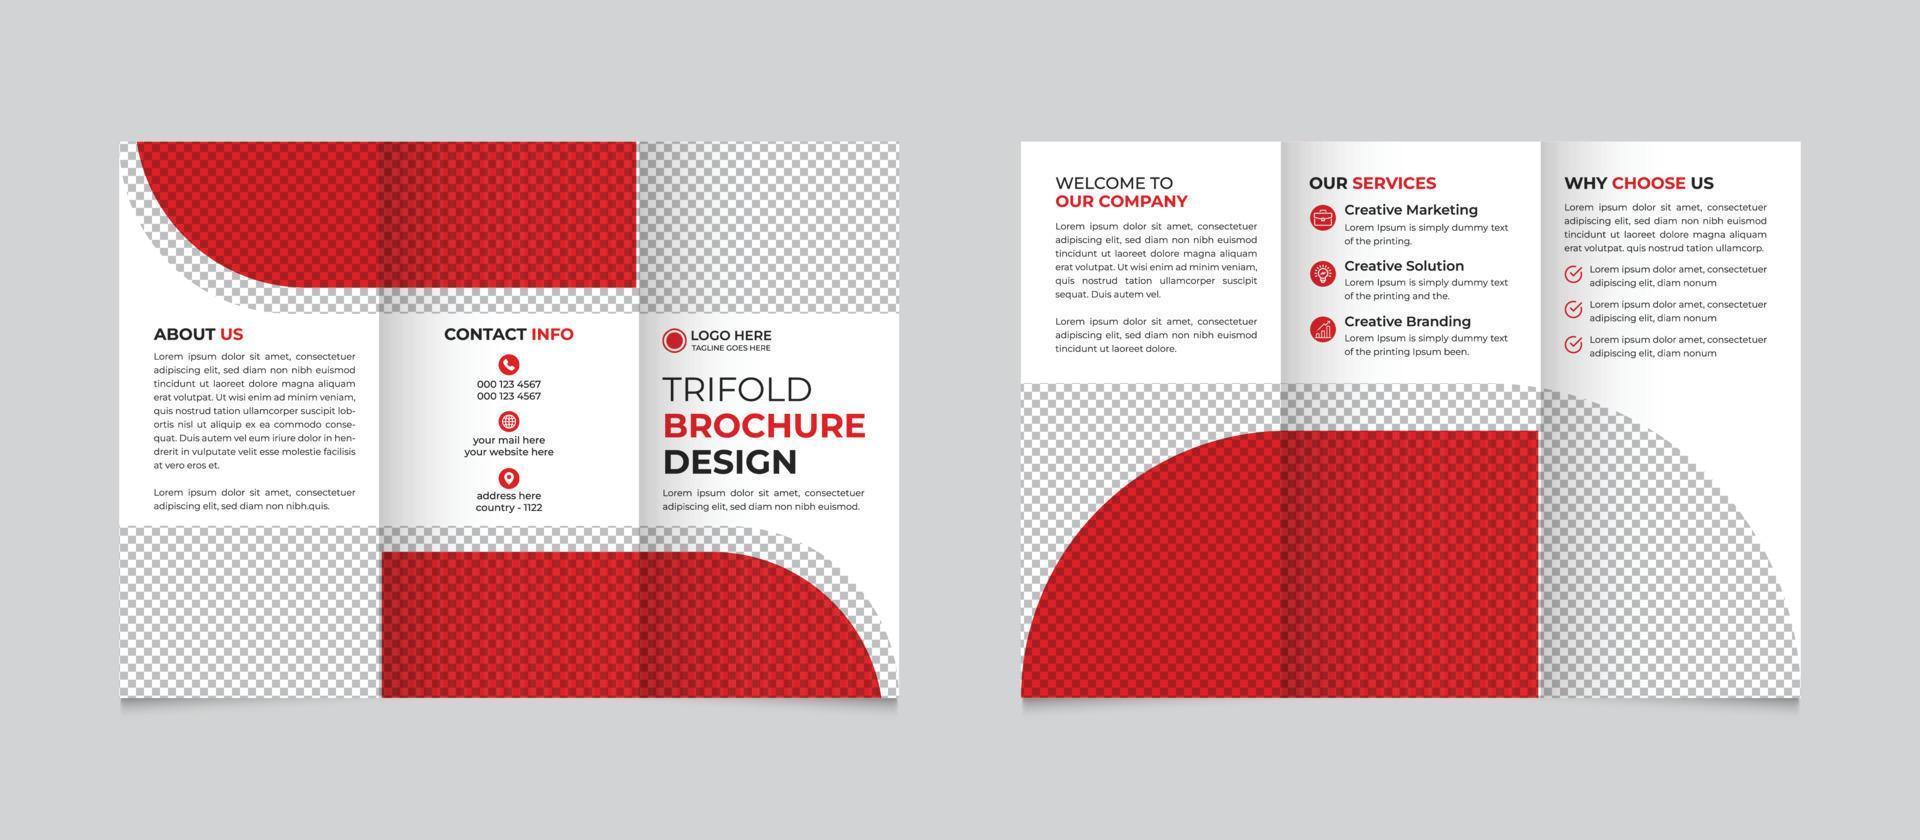 Corporate modern trifold brochure design template Free Vector